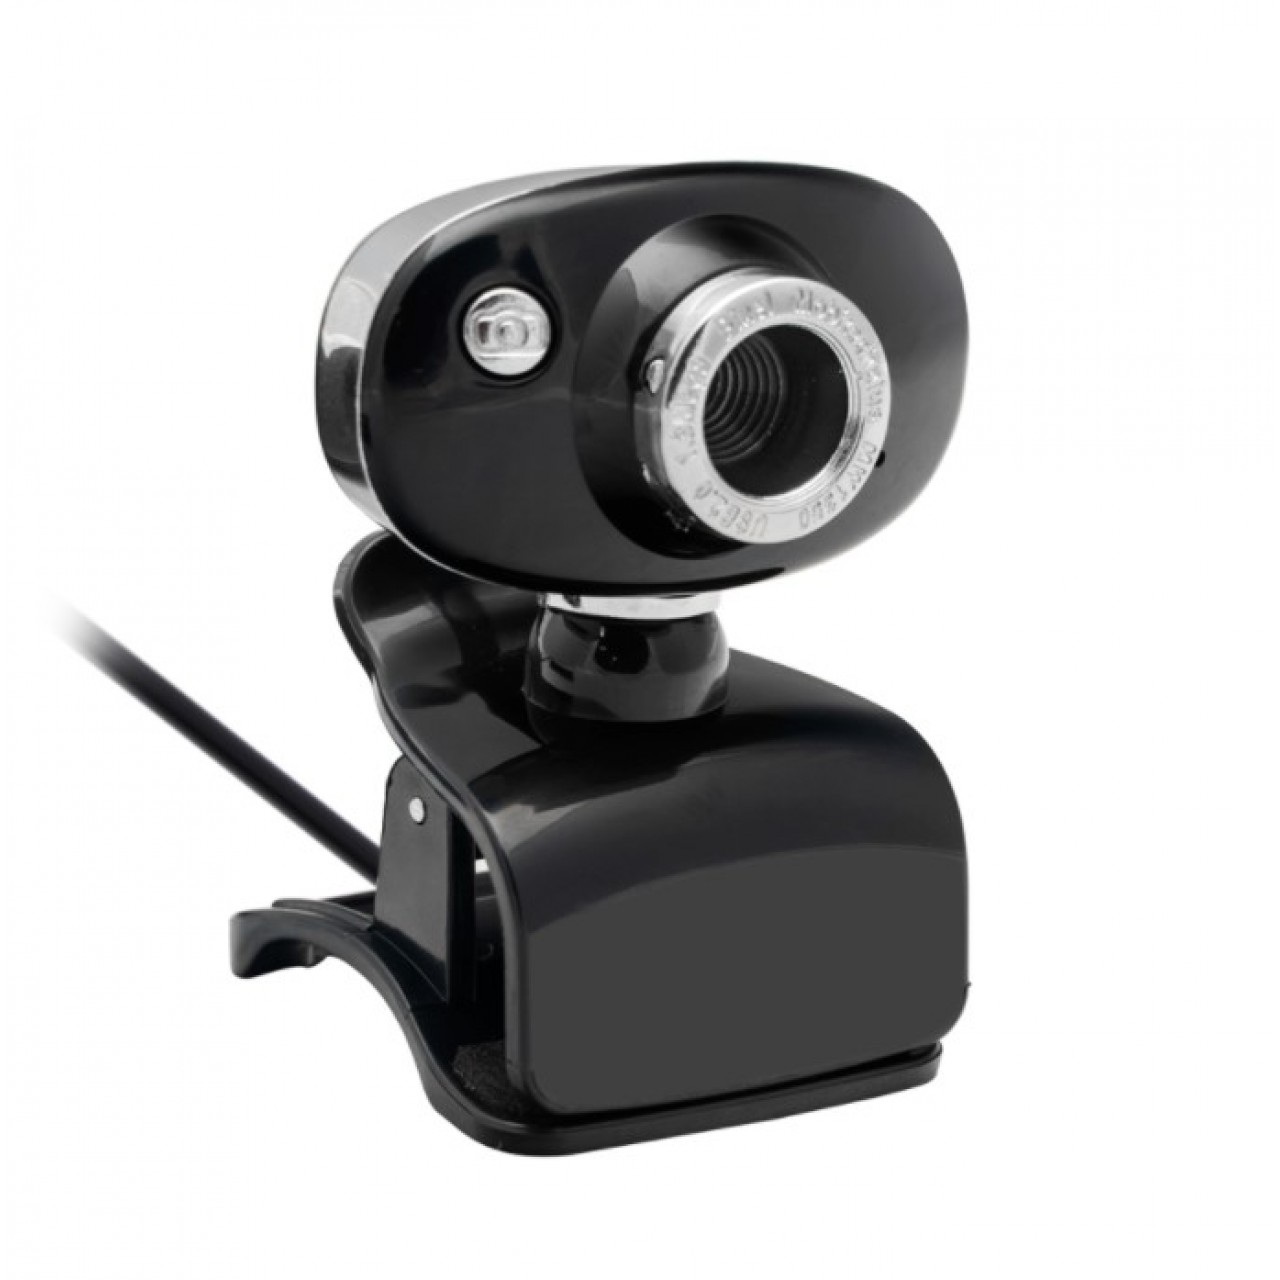 Webcam BC2013 Microphone 480p - 5050 - Μαύρο/Μπλε - OEM